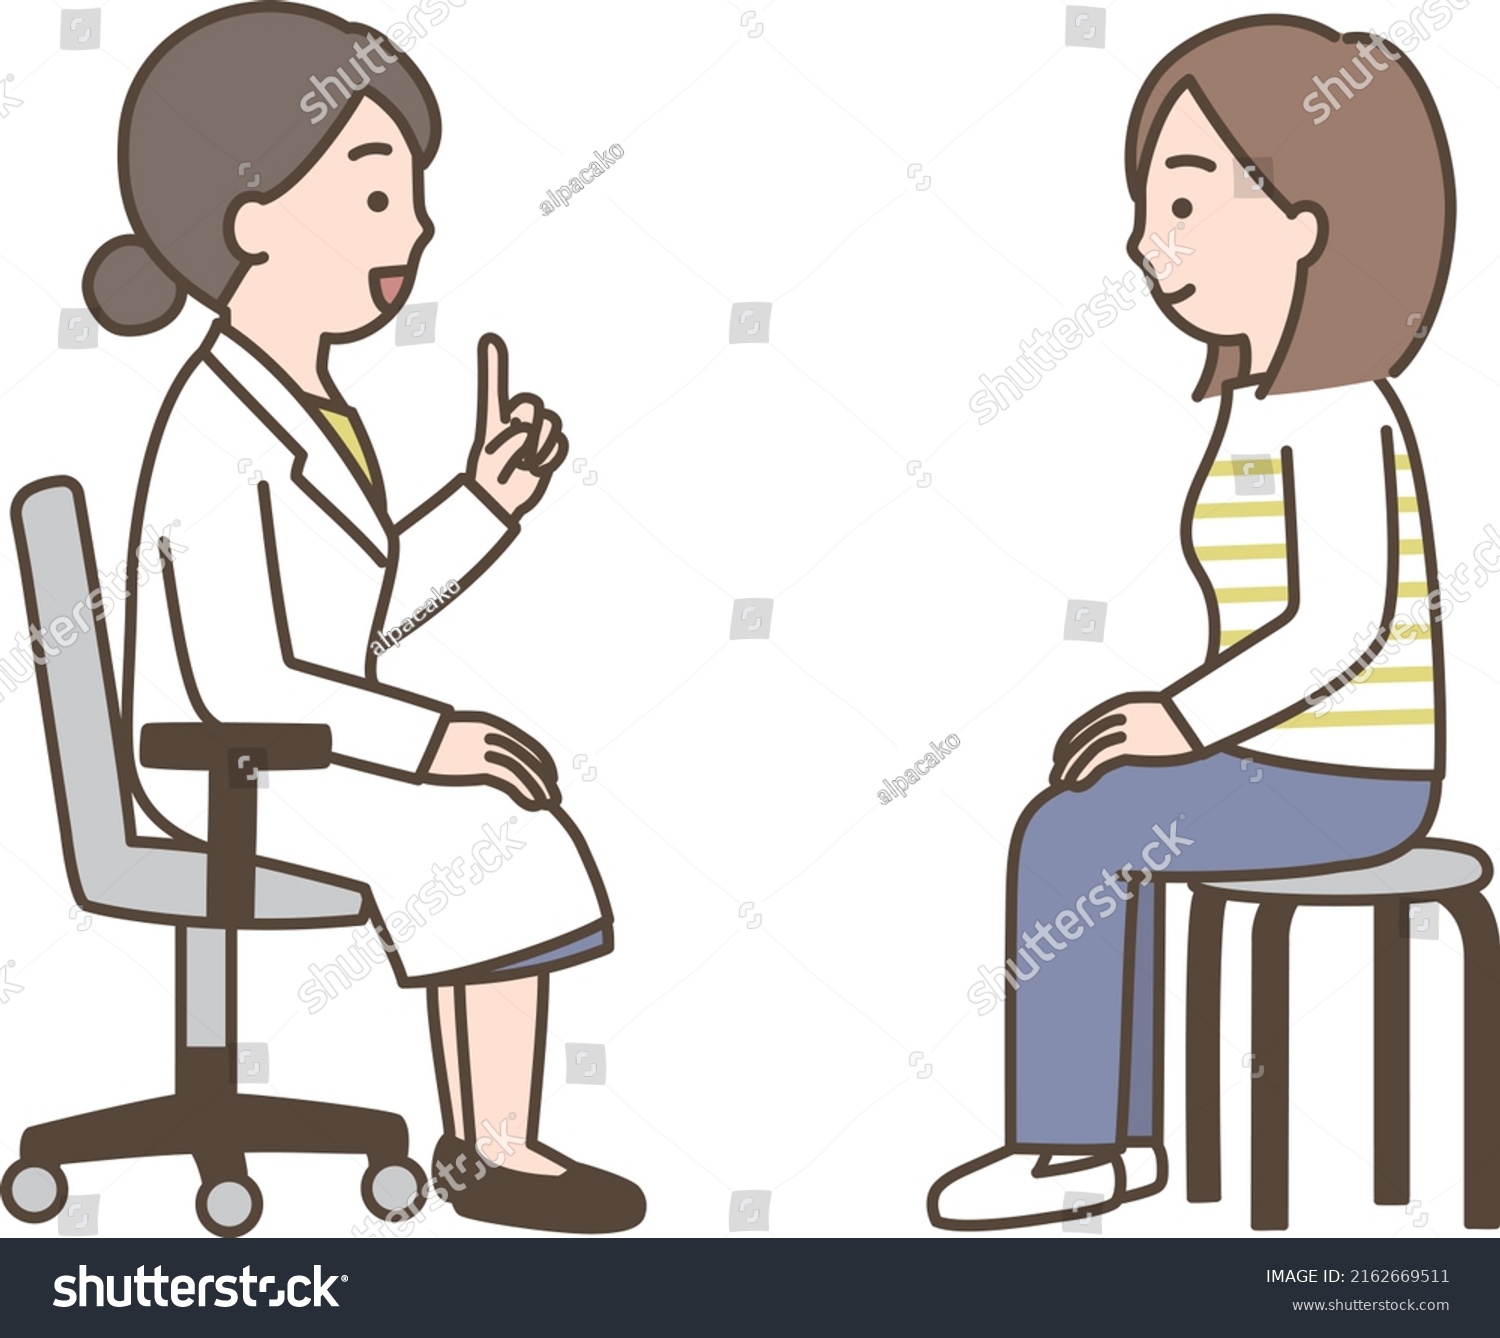 Illustration Doctor Examining Patient Stock Vector Royalty Free 2162669511 Shutterstock